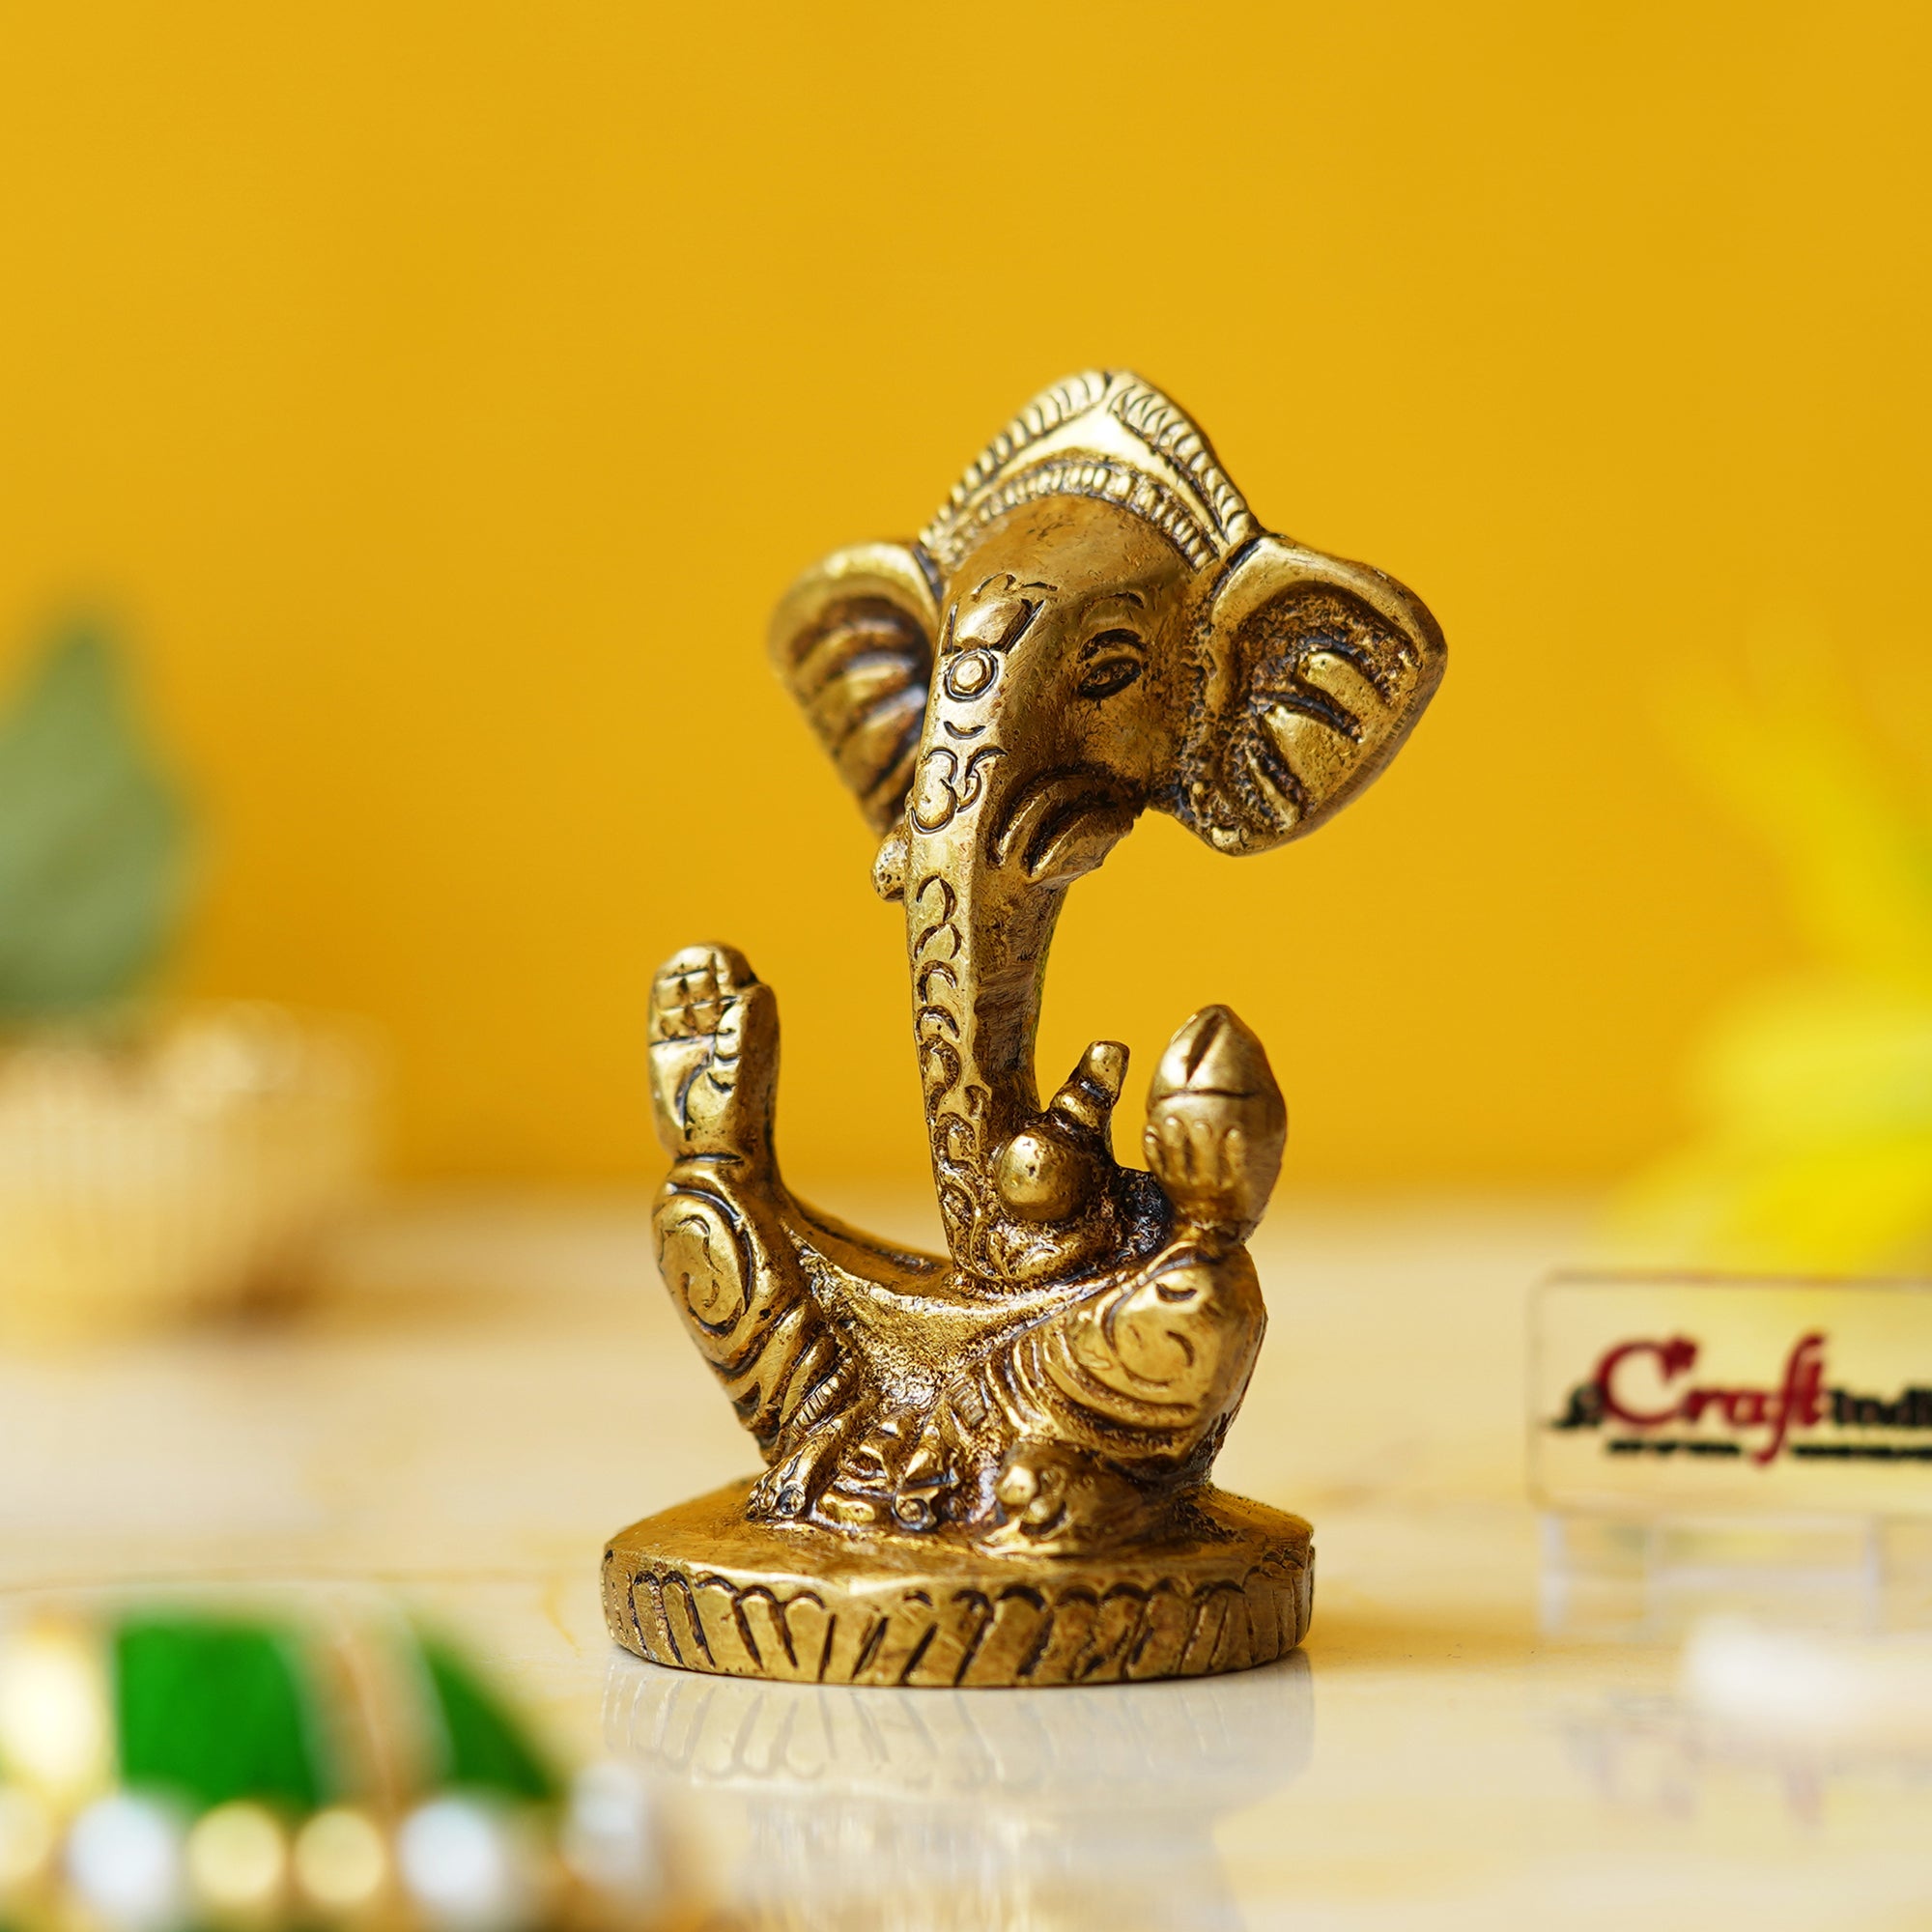 Golden Brass Blessing Lord Ganesha Idol Murti - God Statue for Car Dashboard, Home Decor, Office Desk, Temple Mandir 1